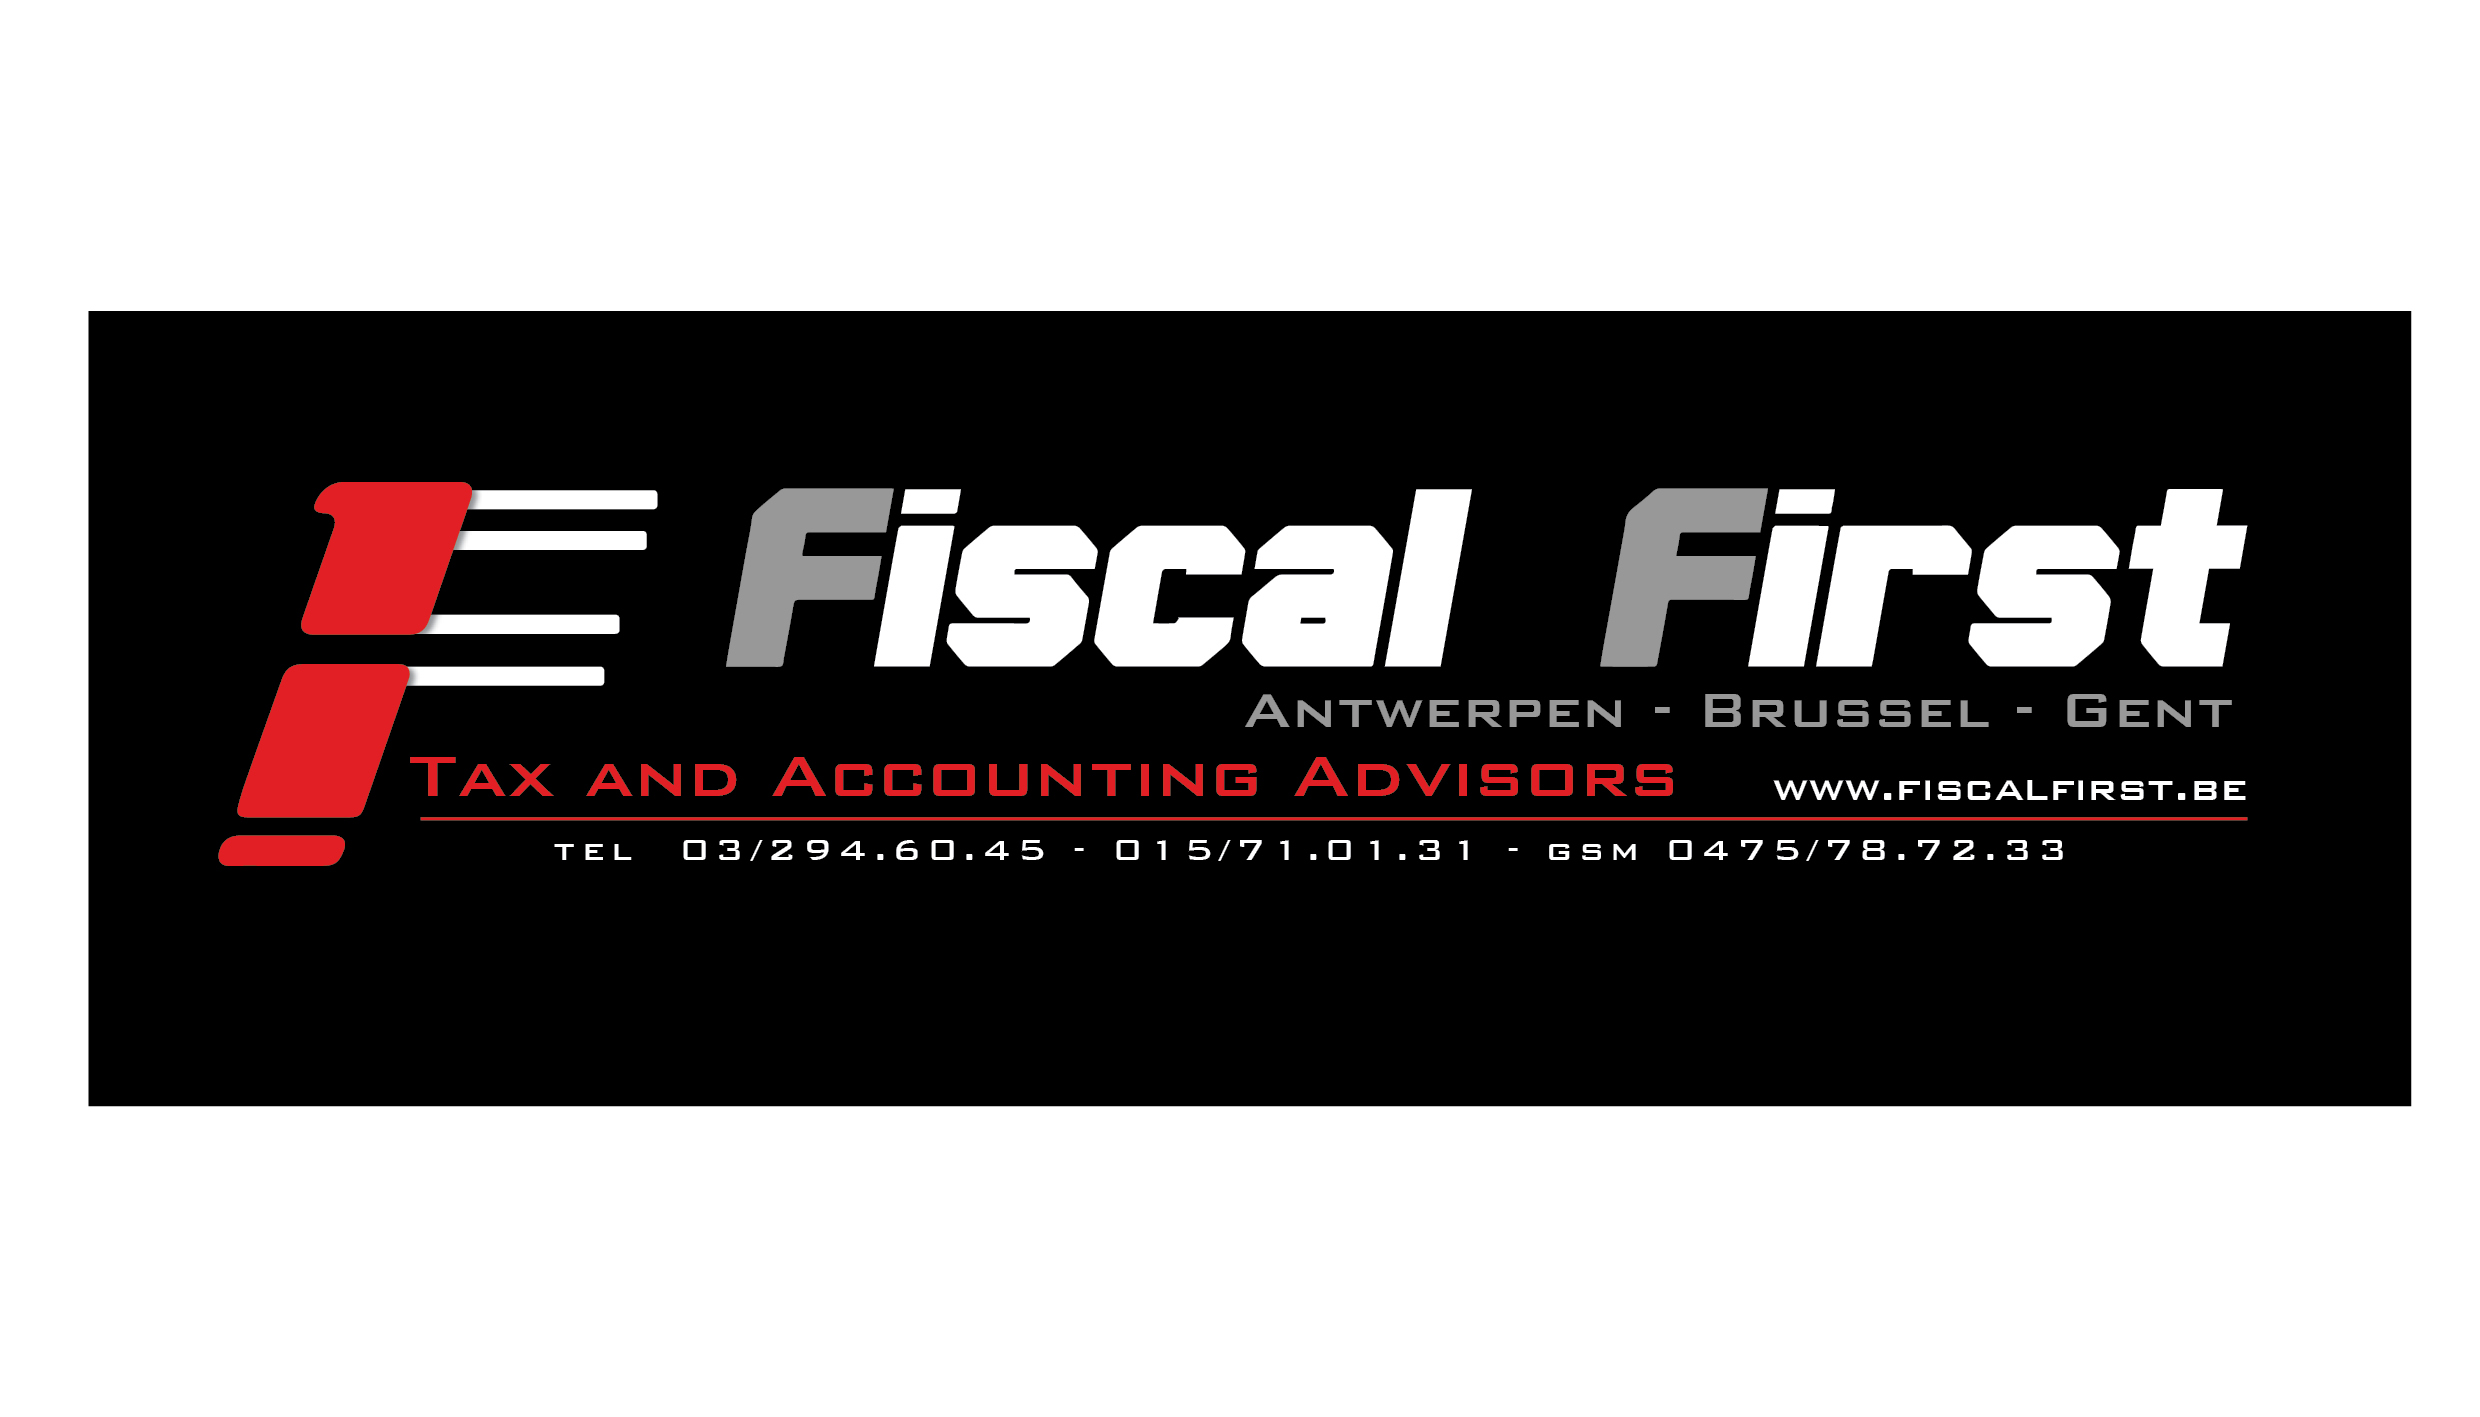 Fiscal first logo3